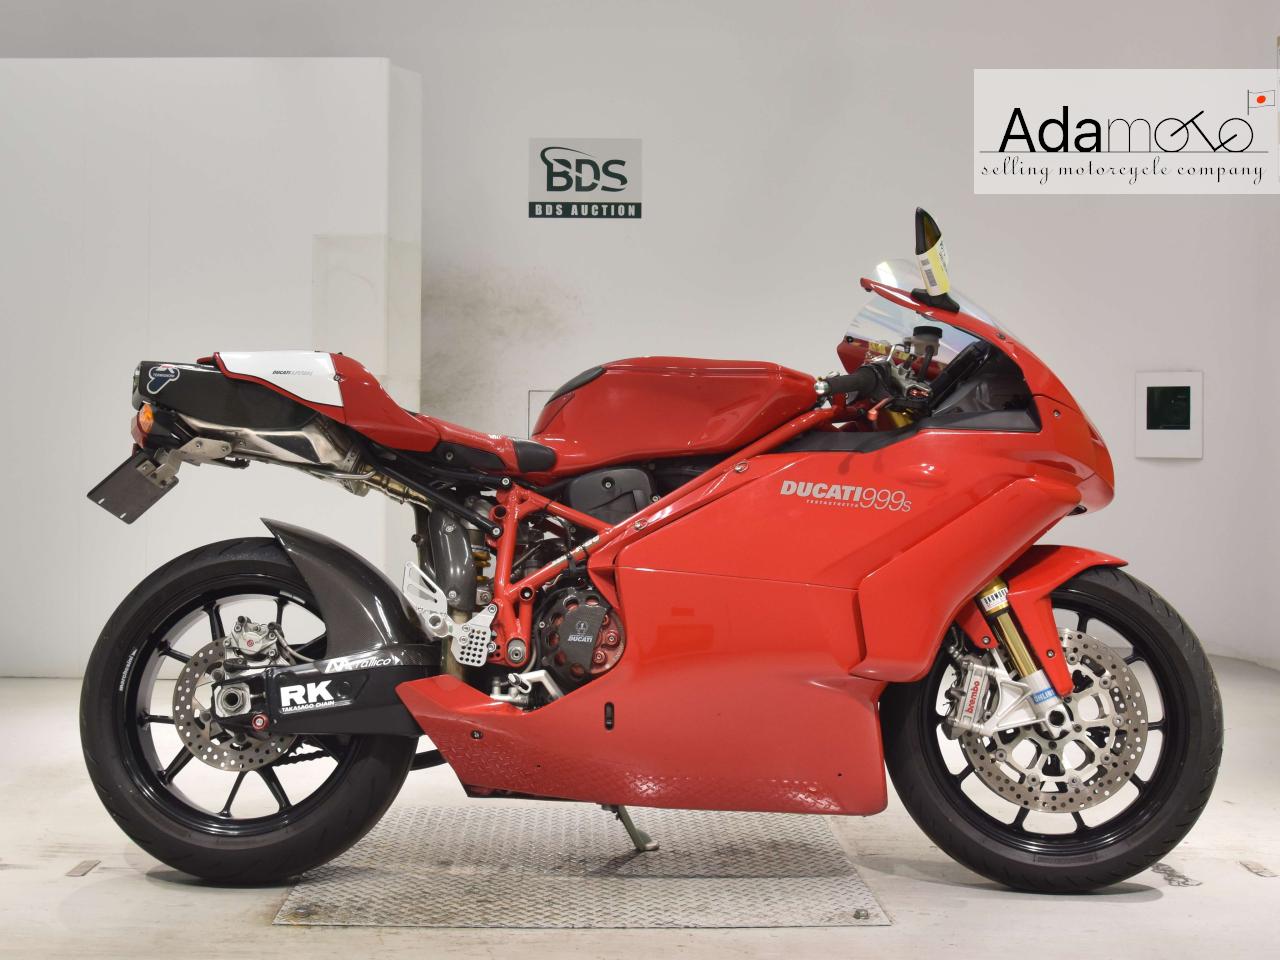 Ducati 999S - Adamoto - Motorcycles from Japan